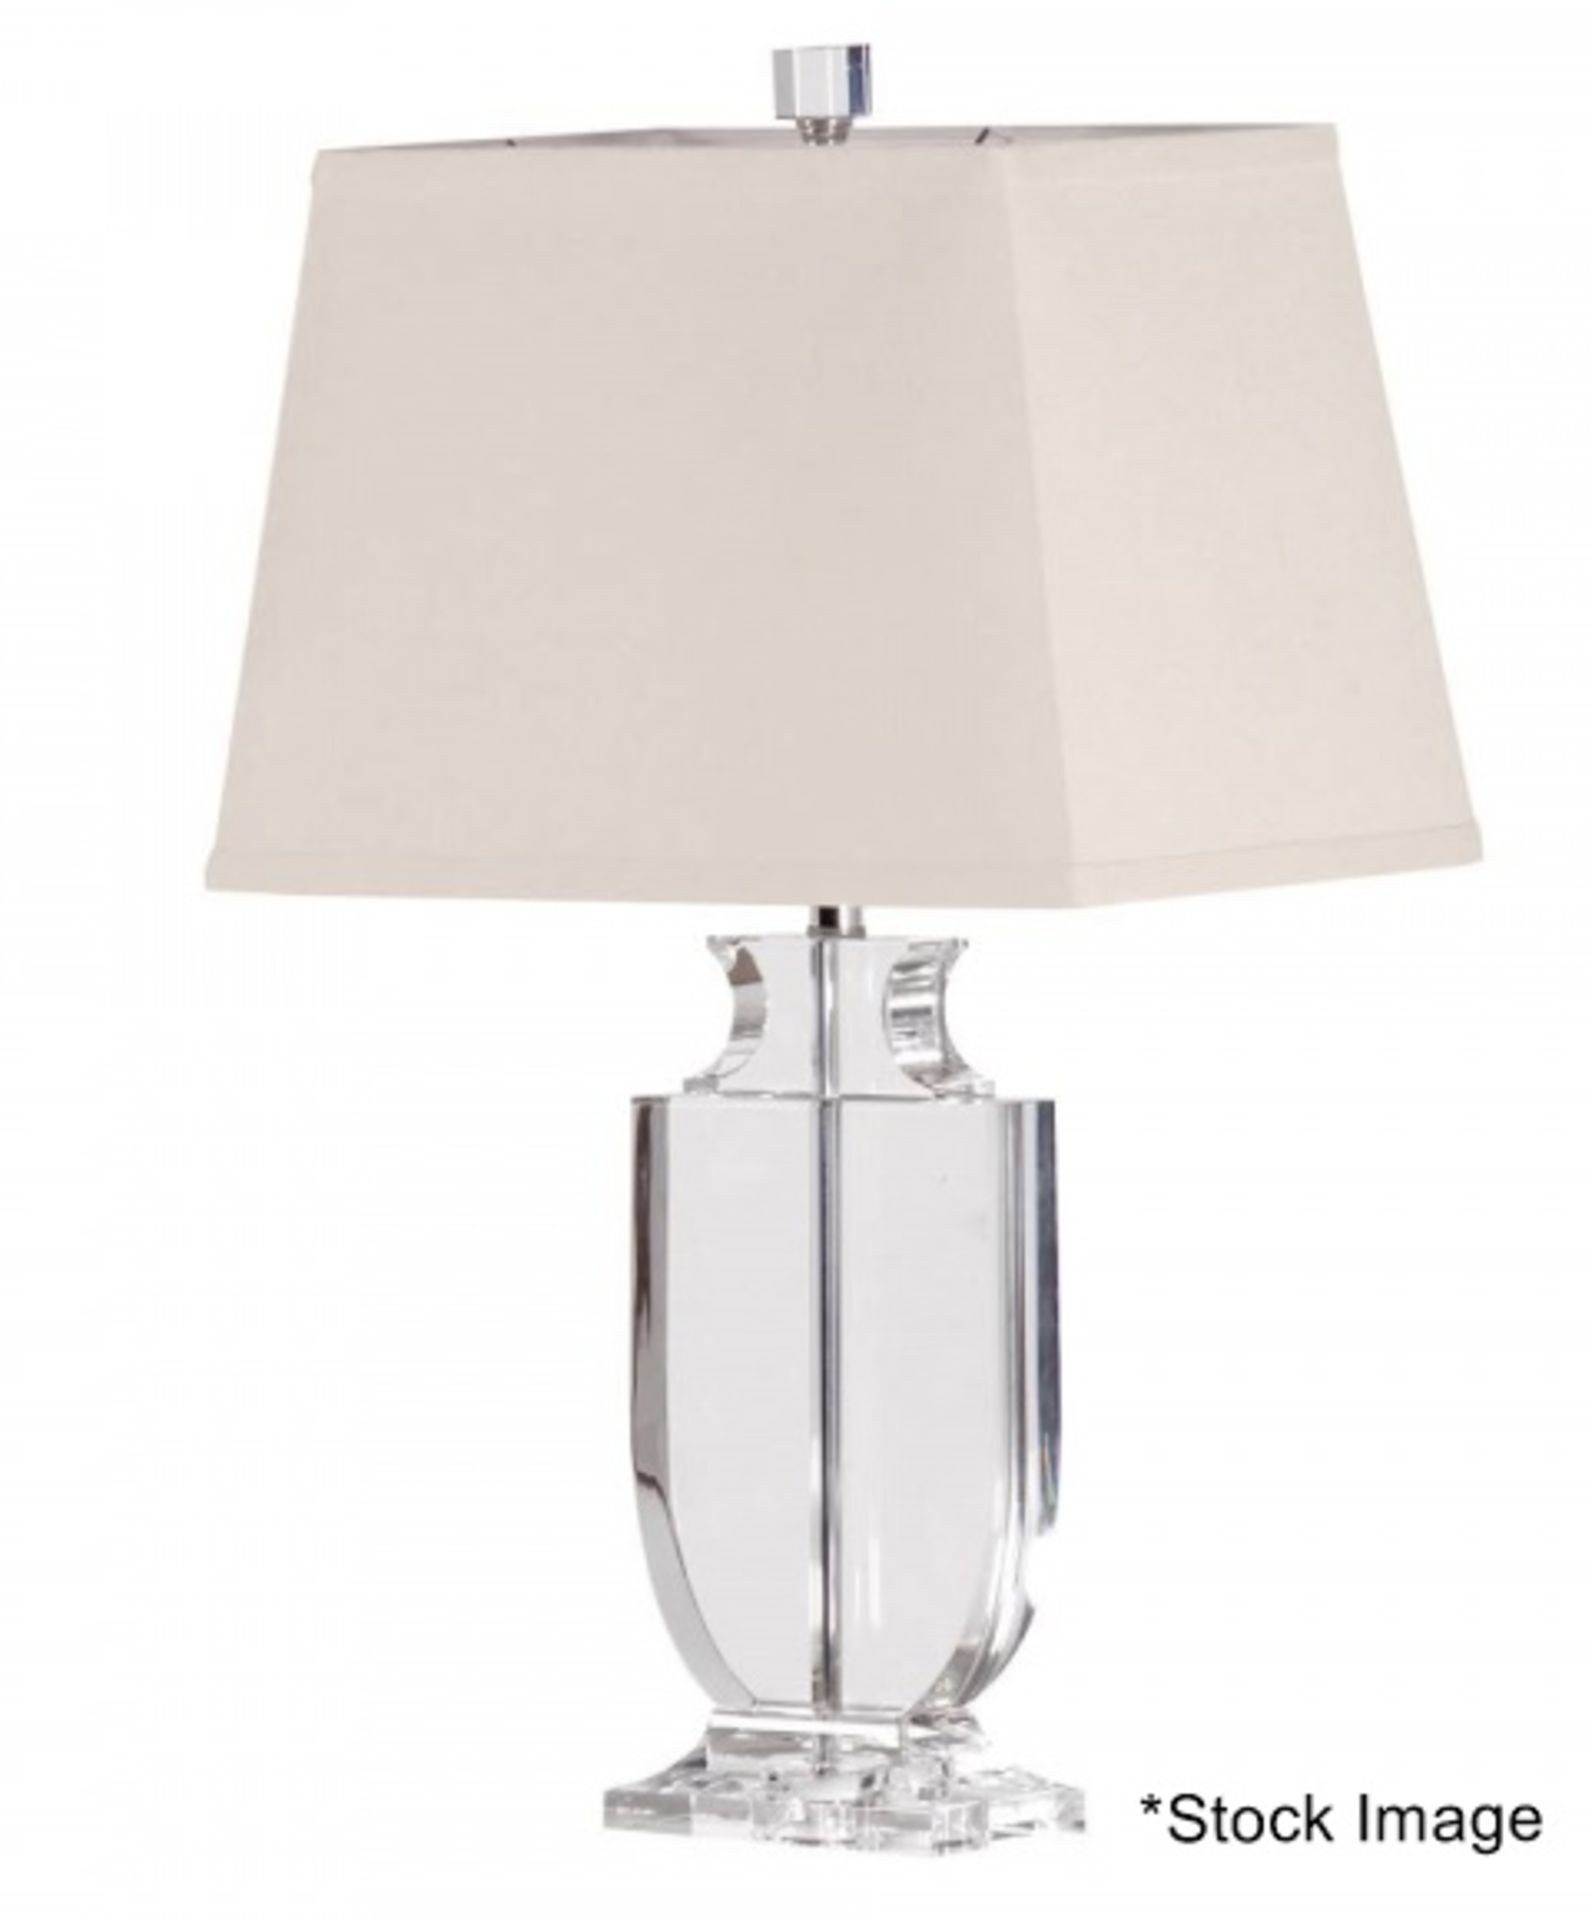 1 x BLUESUNTREE Art Deco Clear Crystal Urn Lamp With Rectangular Beige Shade 62 cm